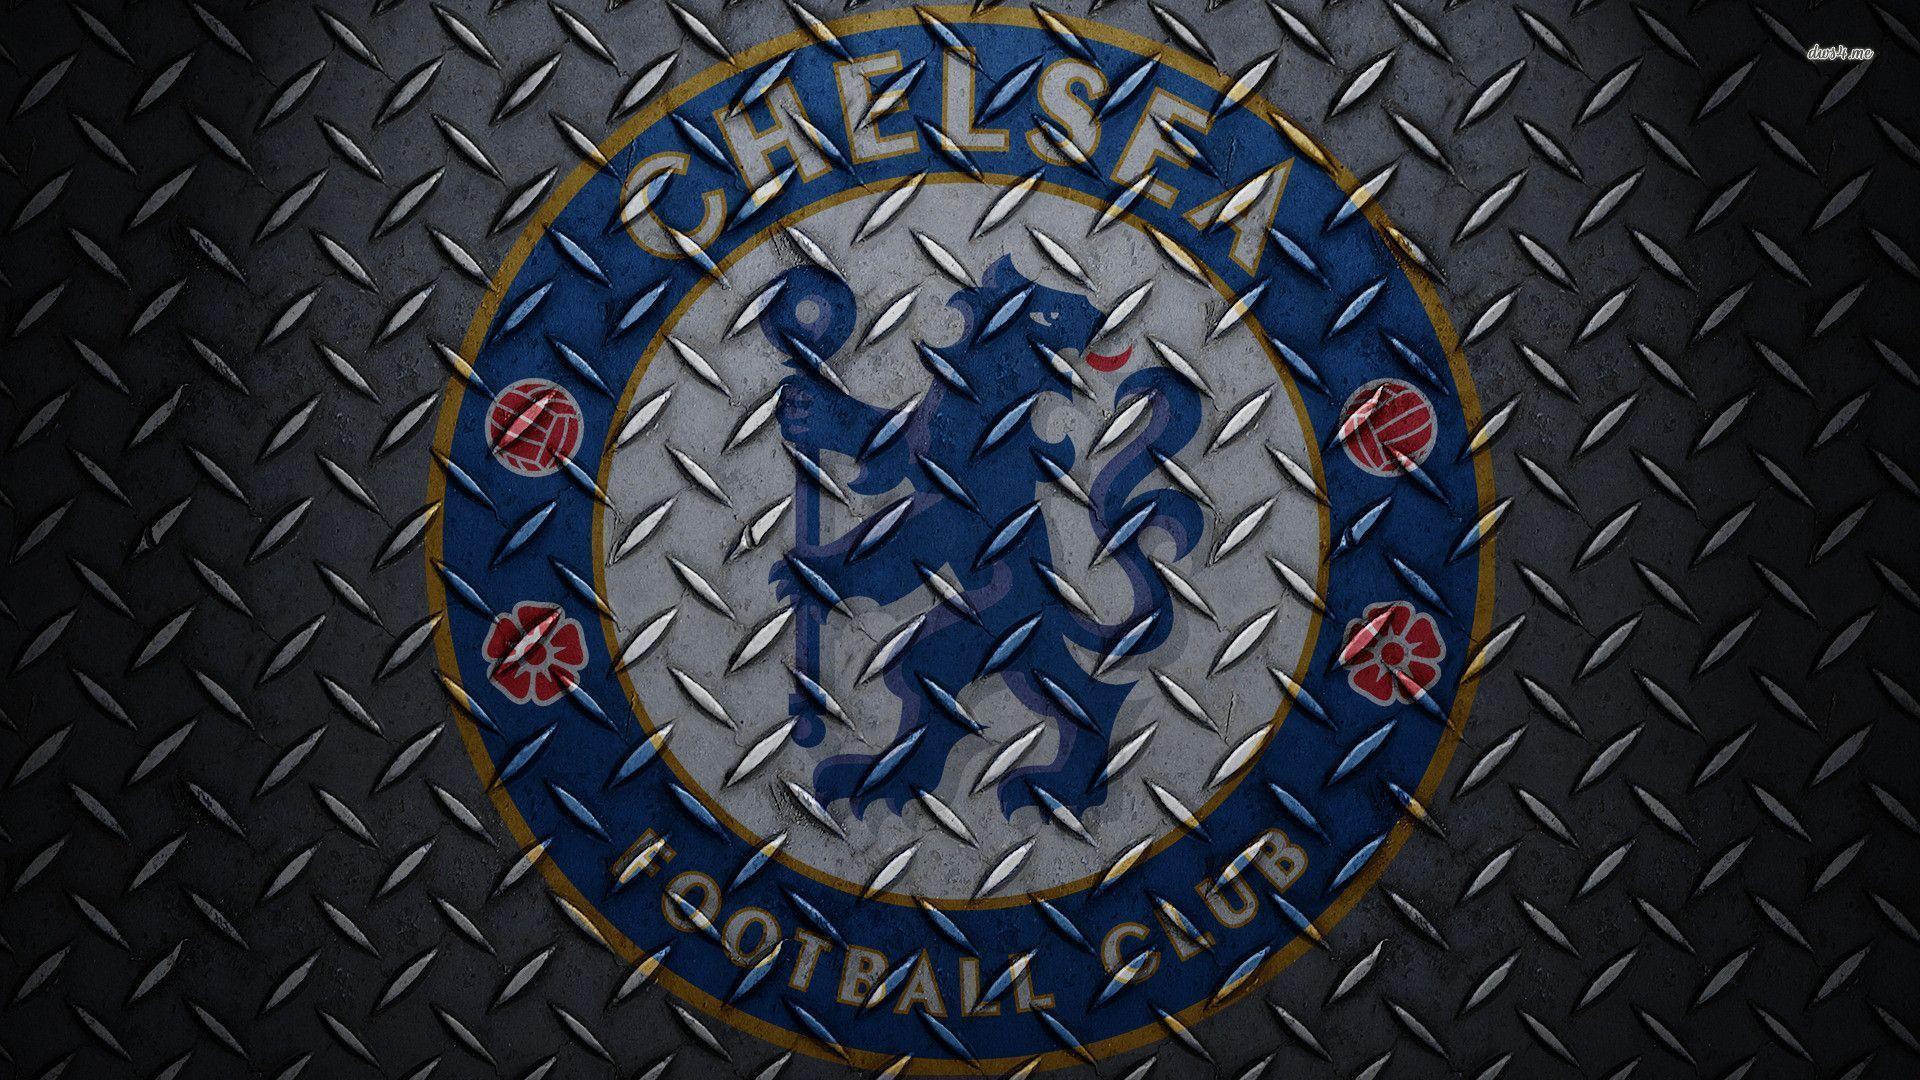 Chelsea Logo Wallpapers - Wallpaper Cave